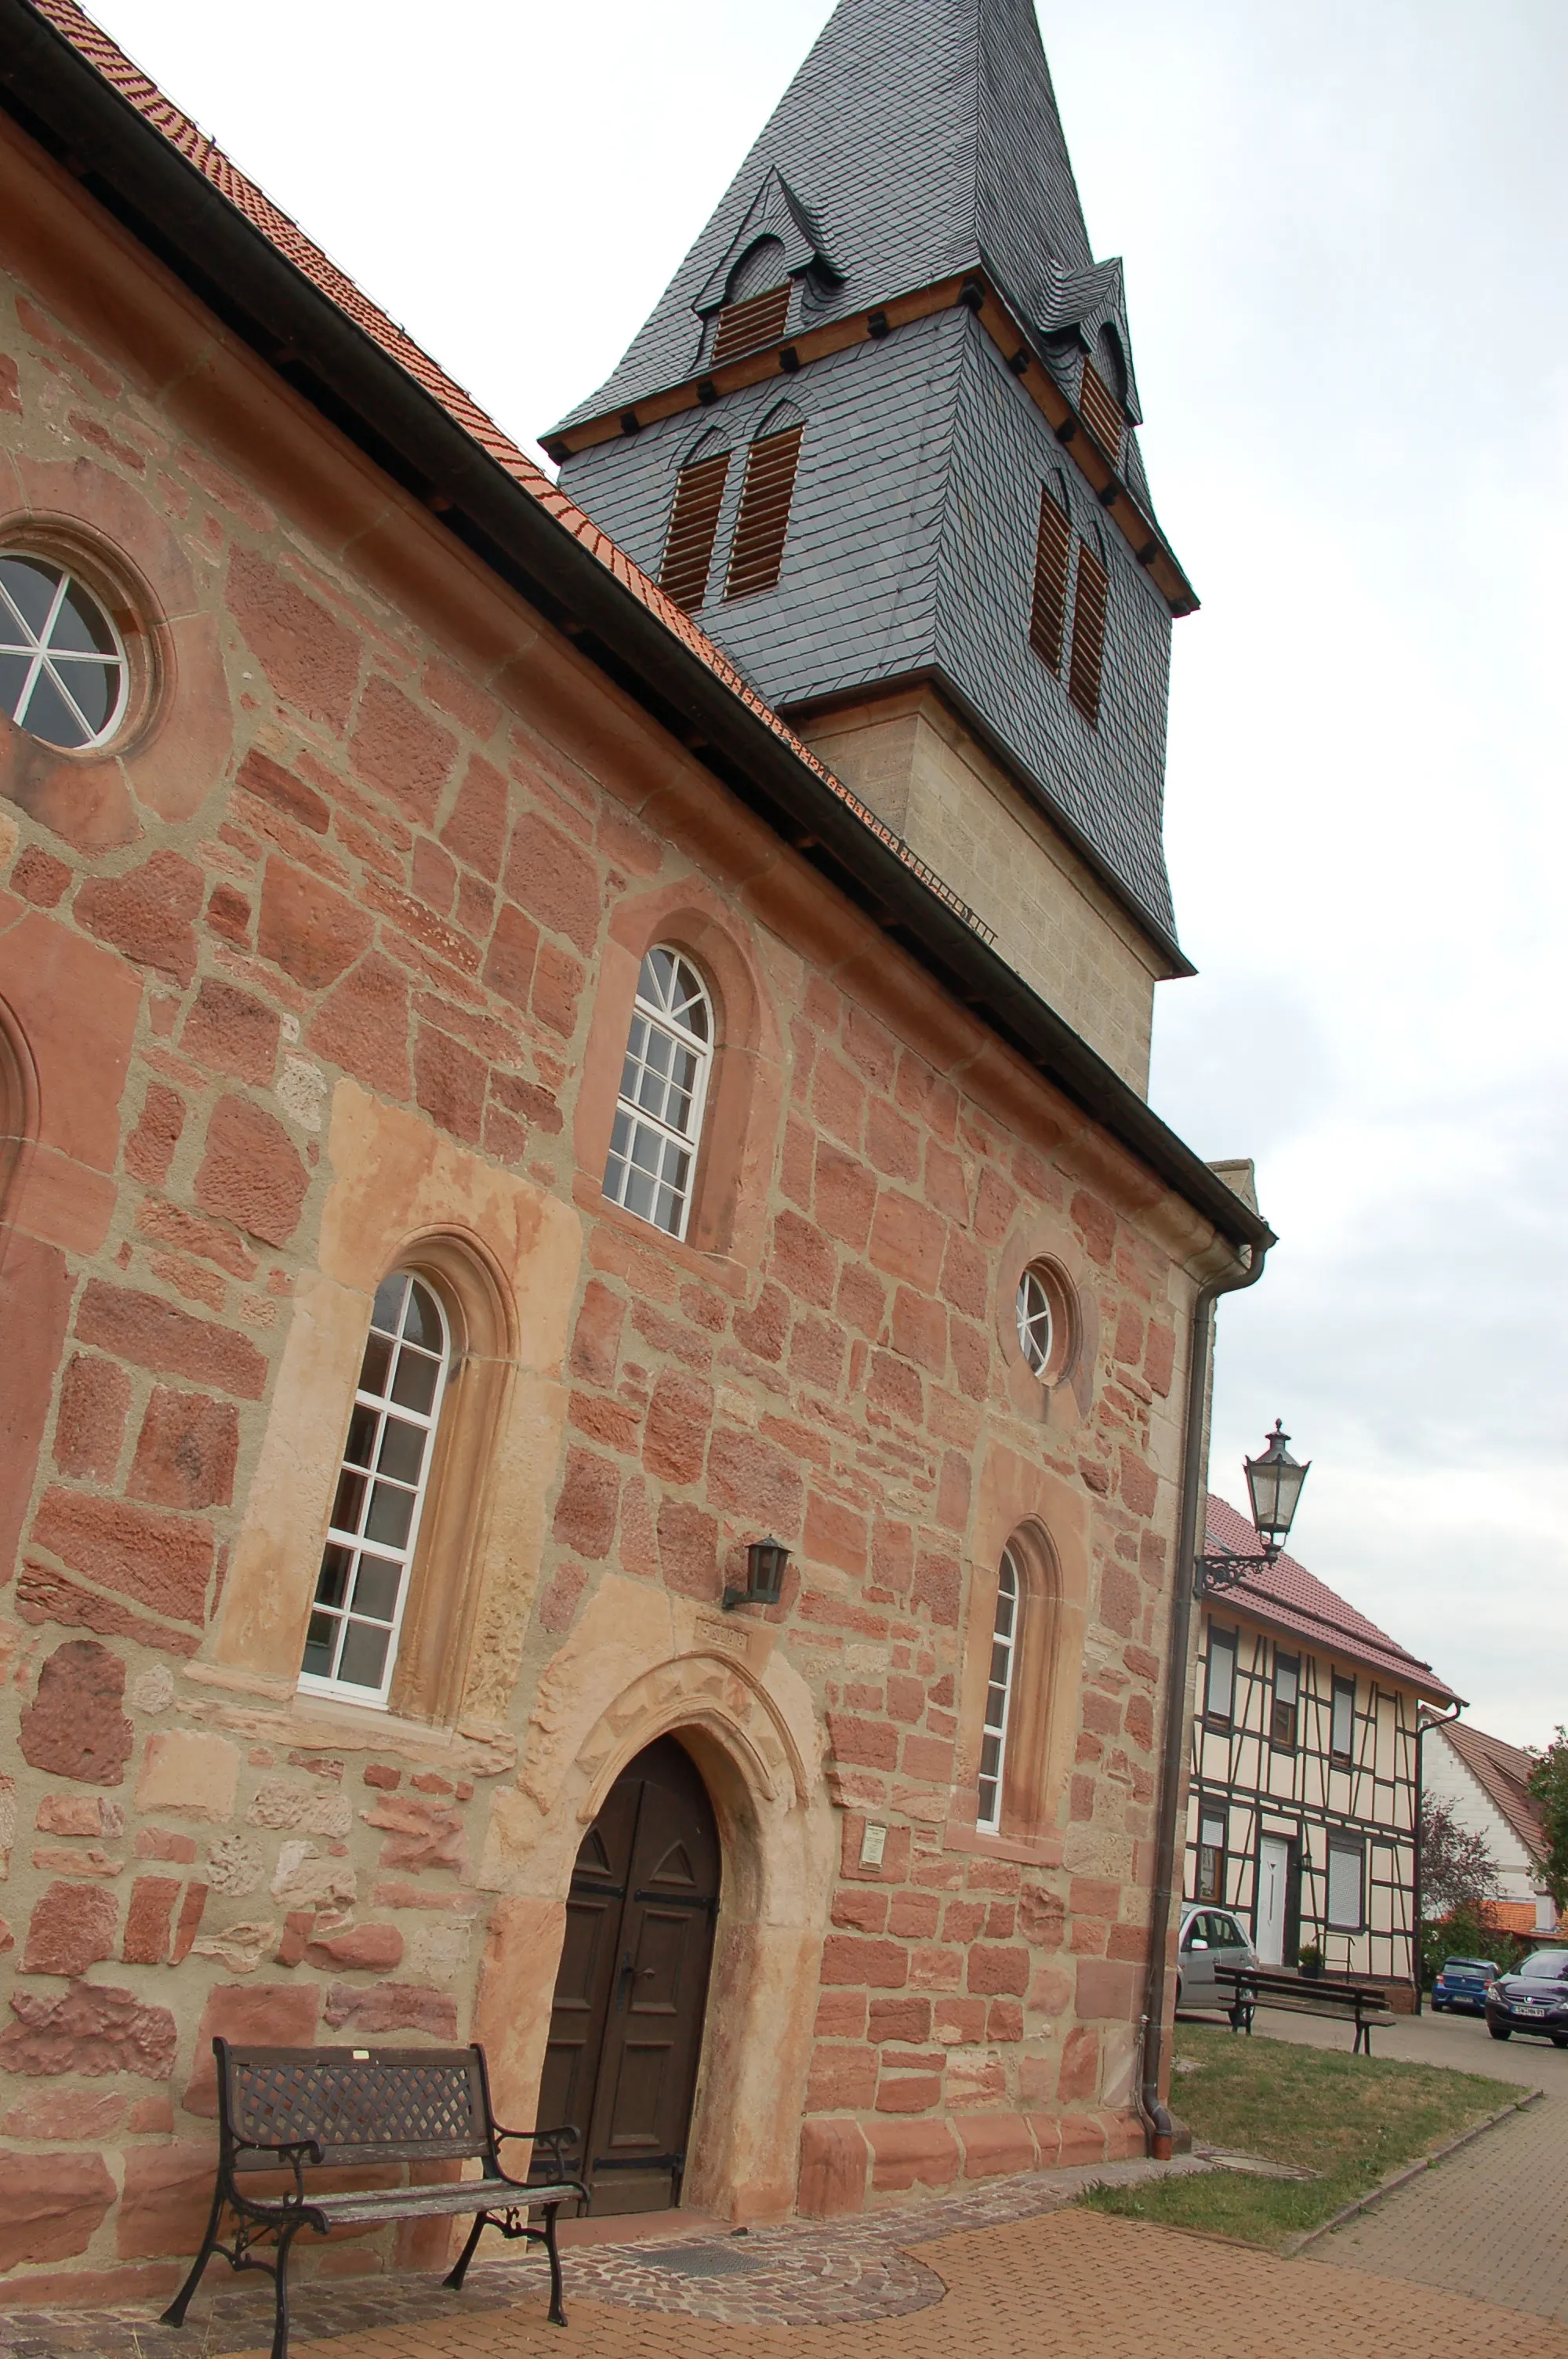 Photo showing: village church in Jestädt, Hesse, Germany